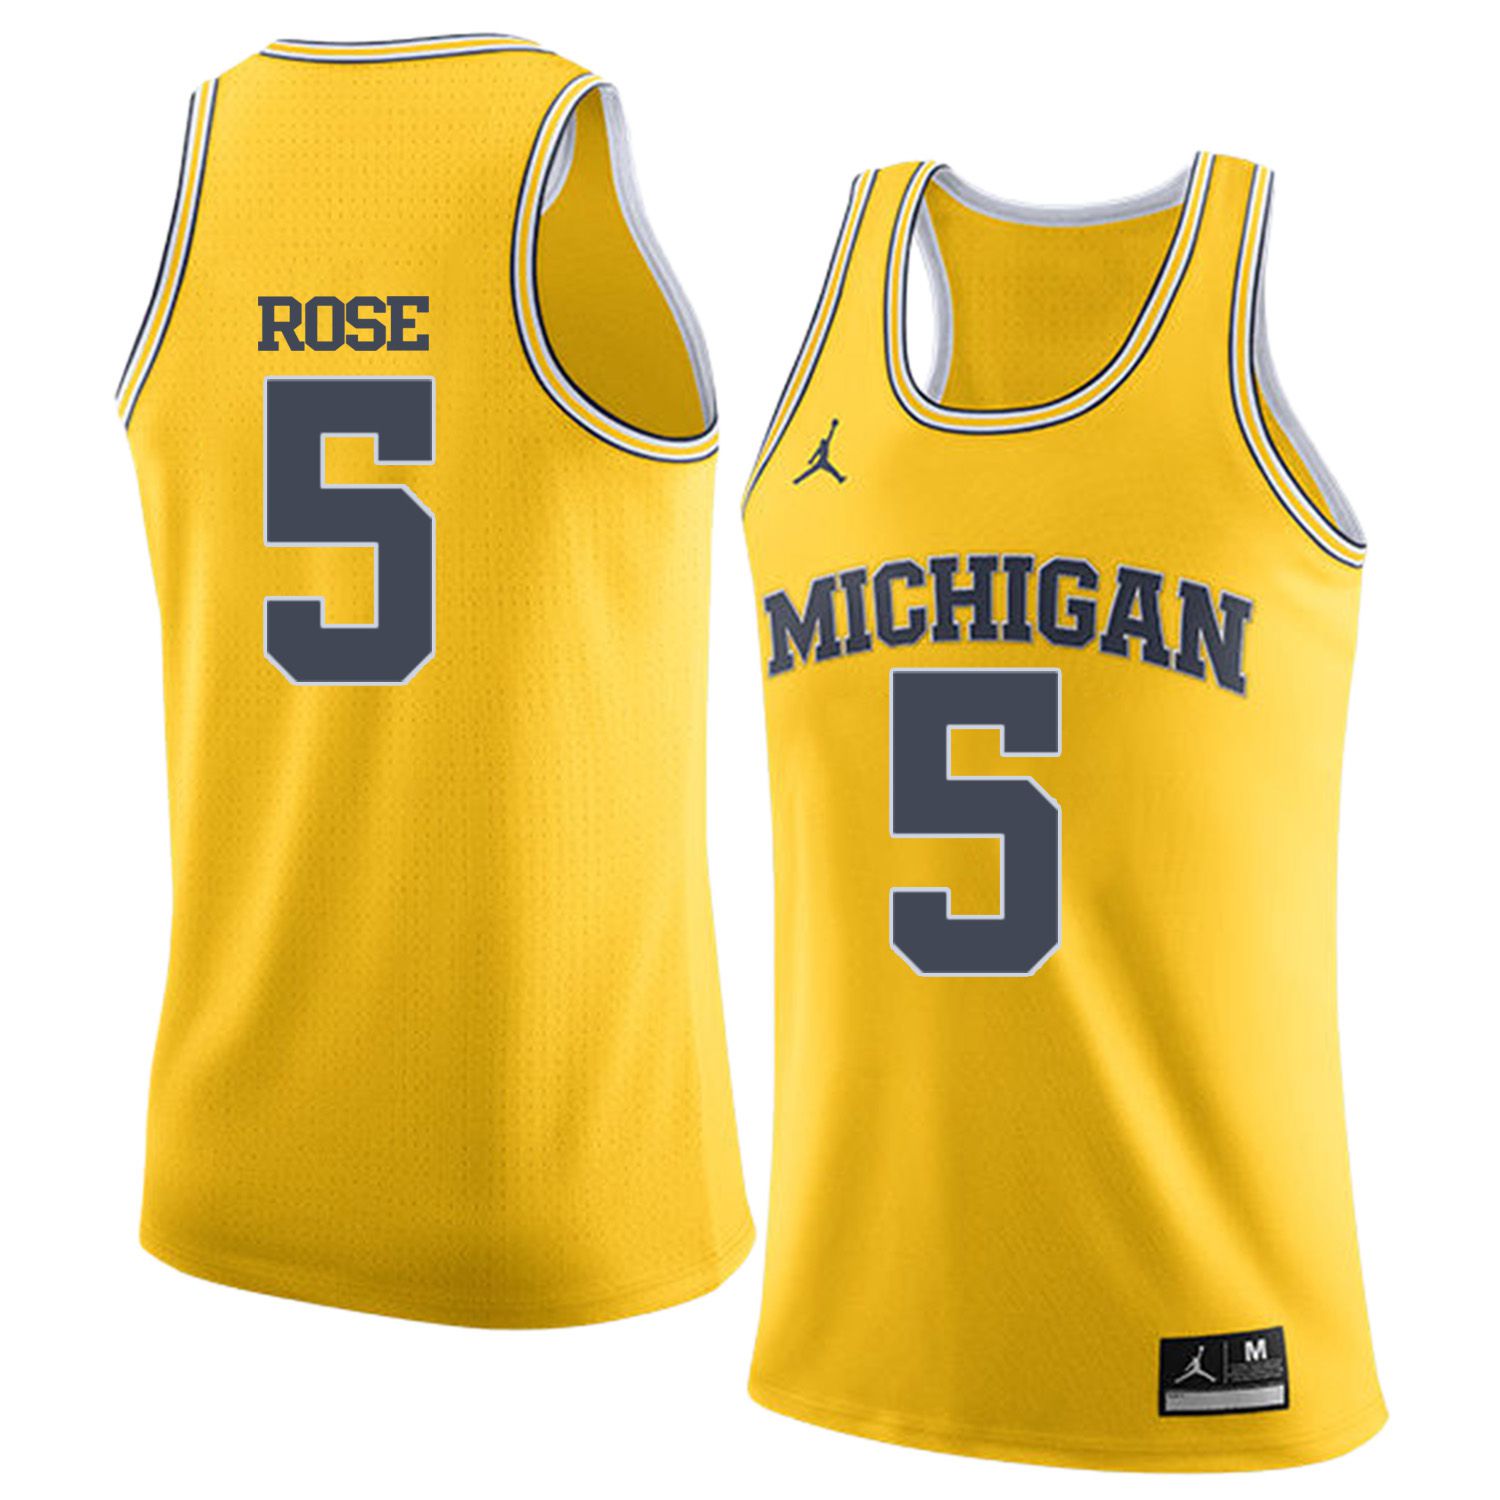 Men Jordan University of Michigan Basketball Yellow 5 Rose Customized NCAA Jerseys